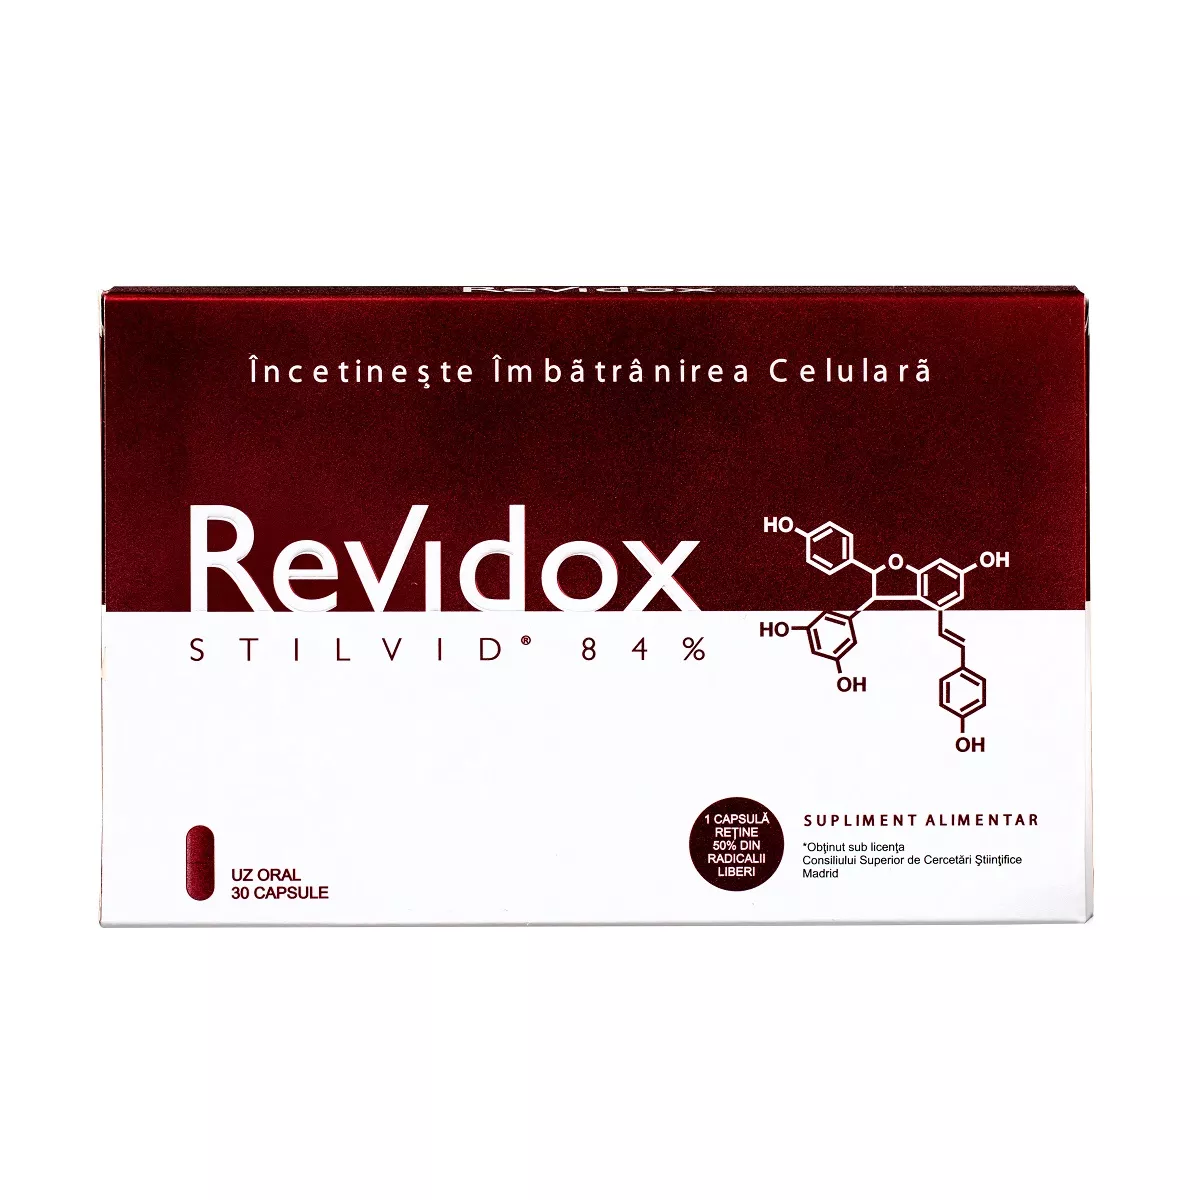 REVIDOX CTX30 CPS, [],nordpharm.ro